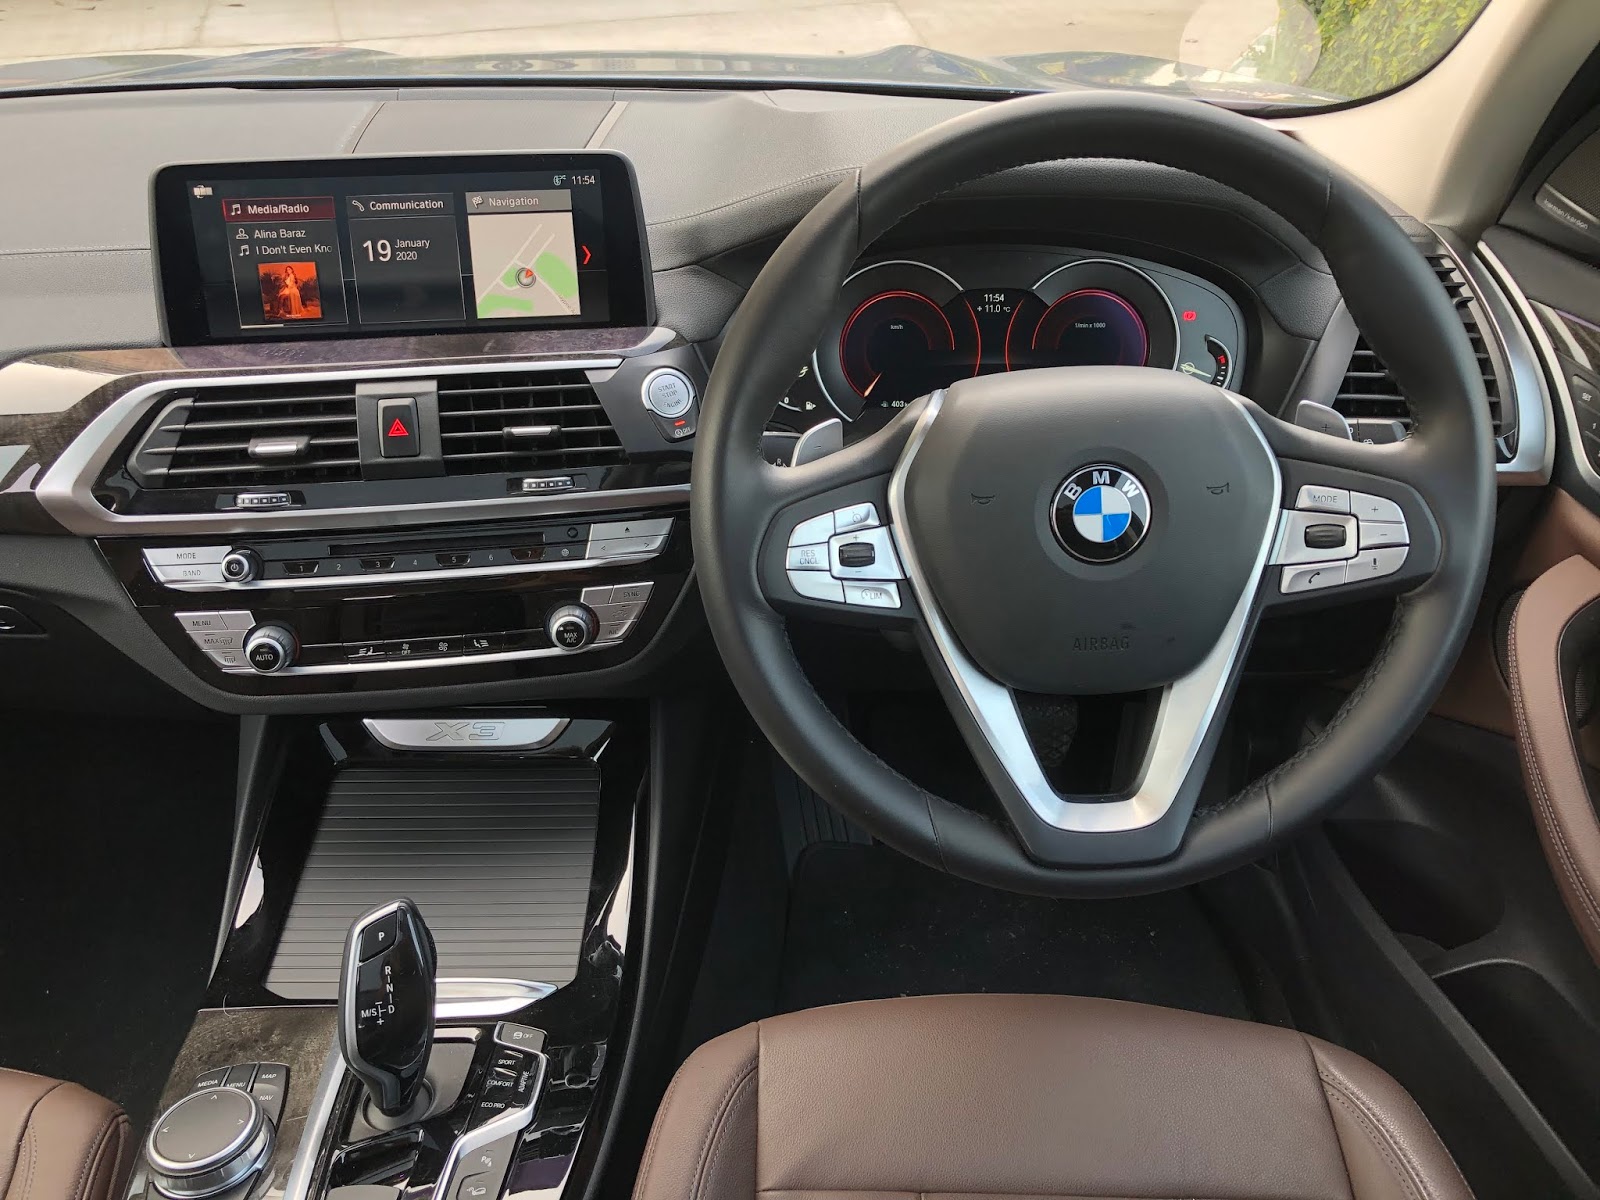 The BMW X3 xDrive20d interiors